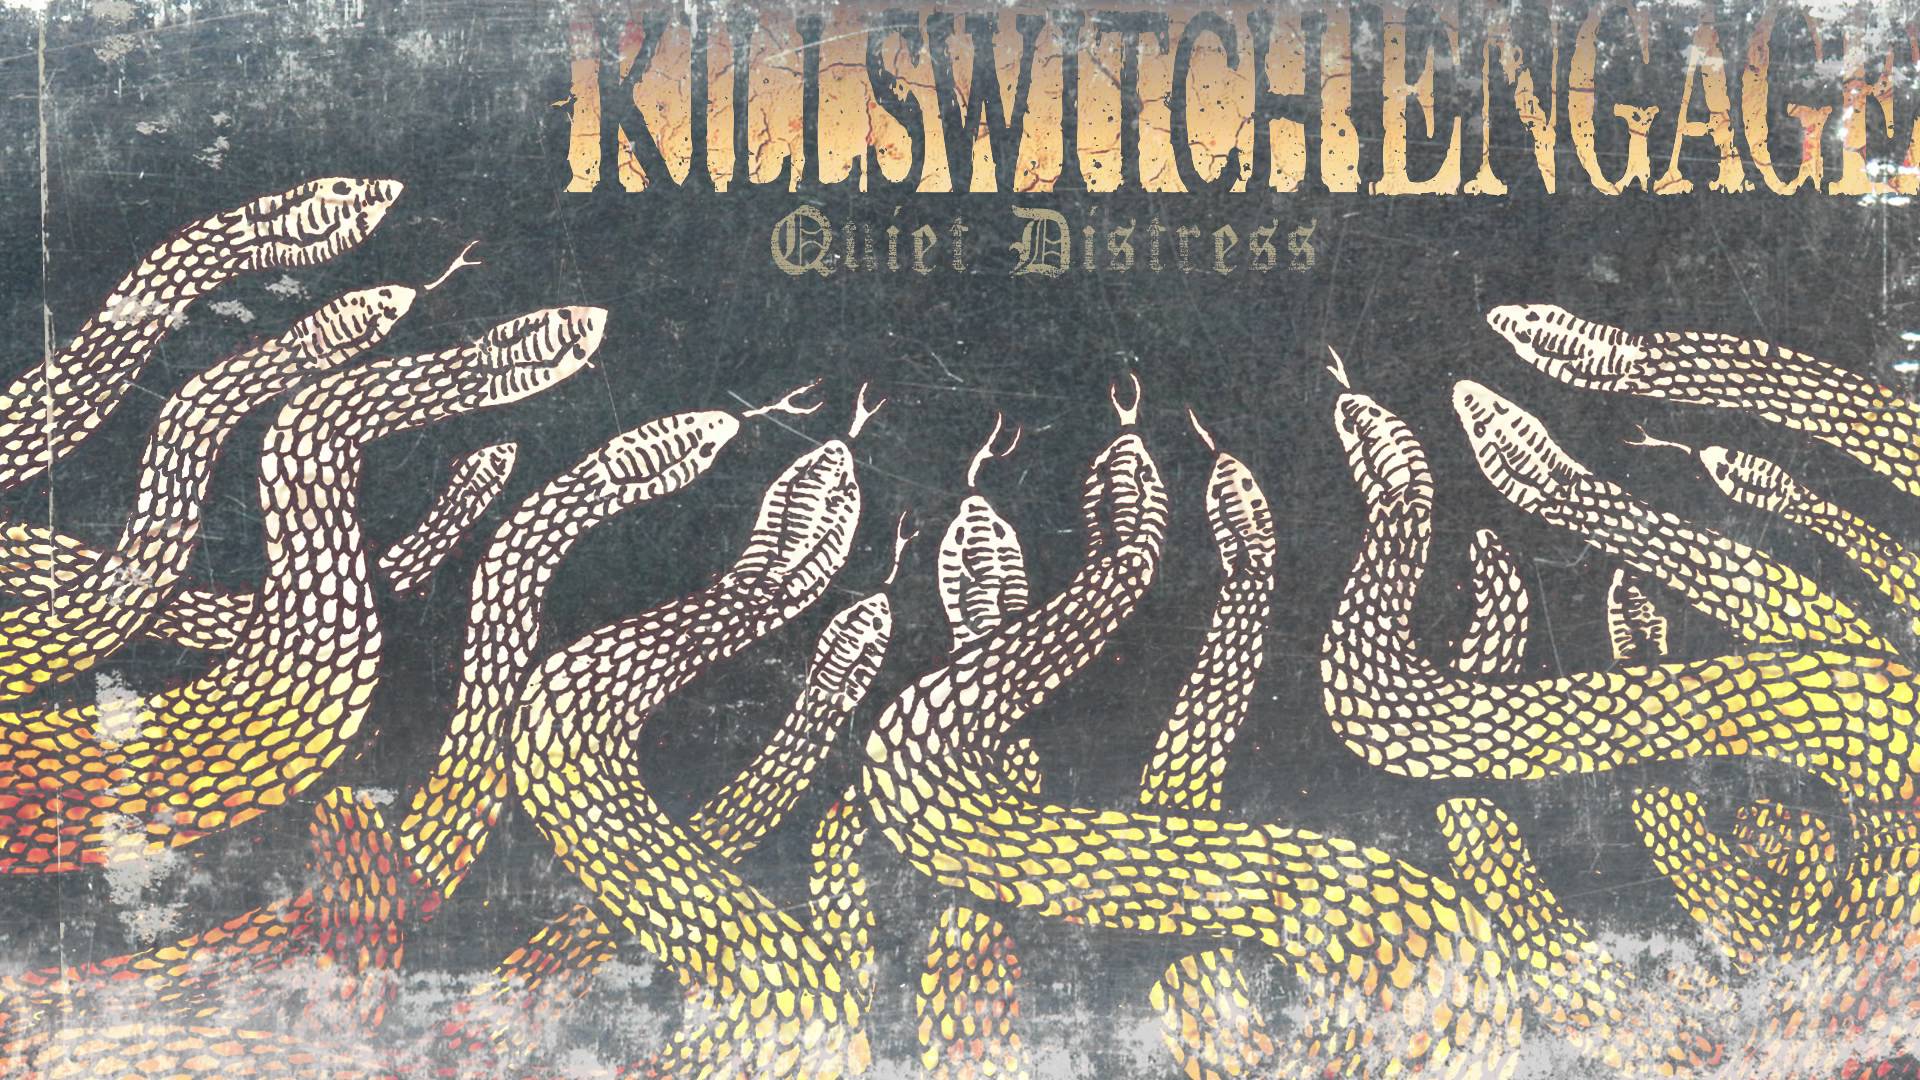 Killswitch Engage - Quiet Distress